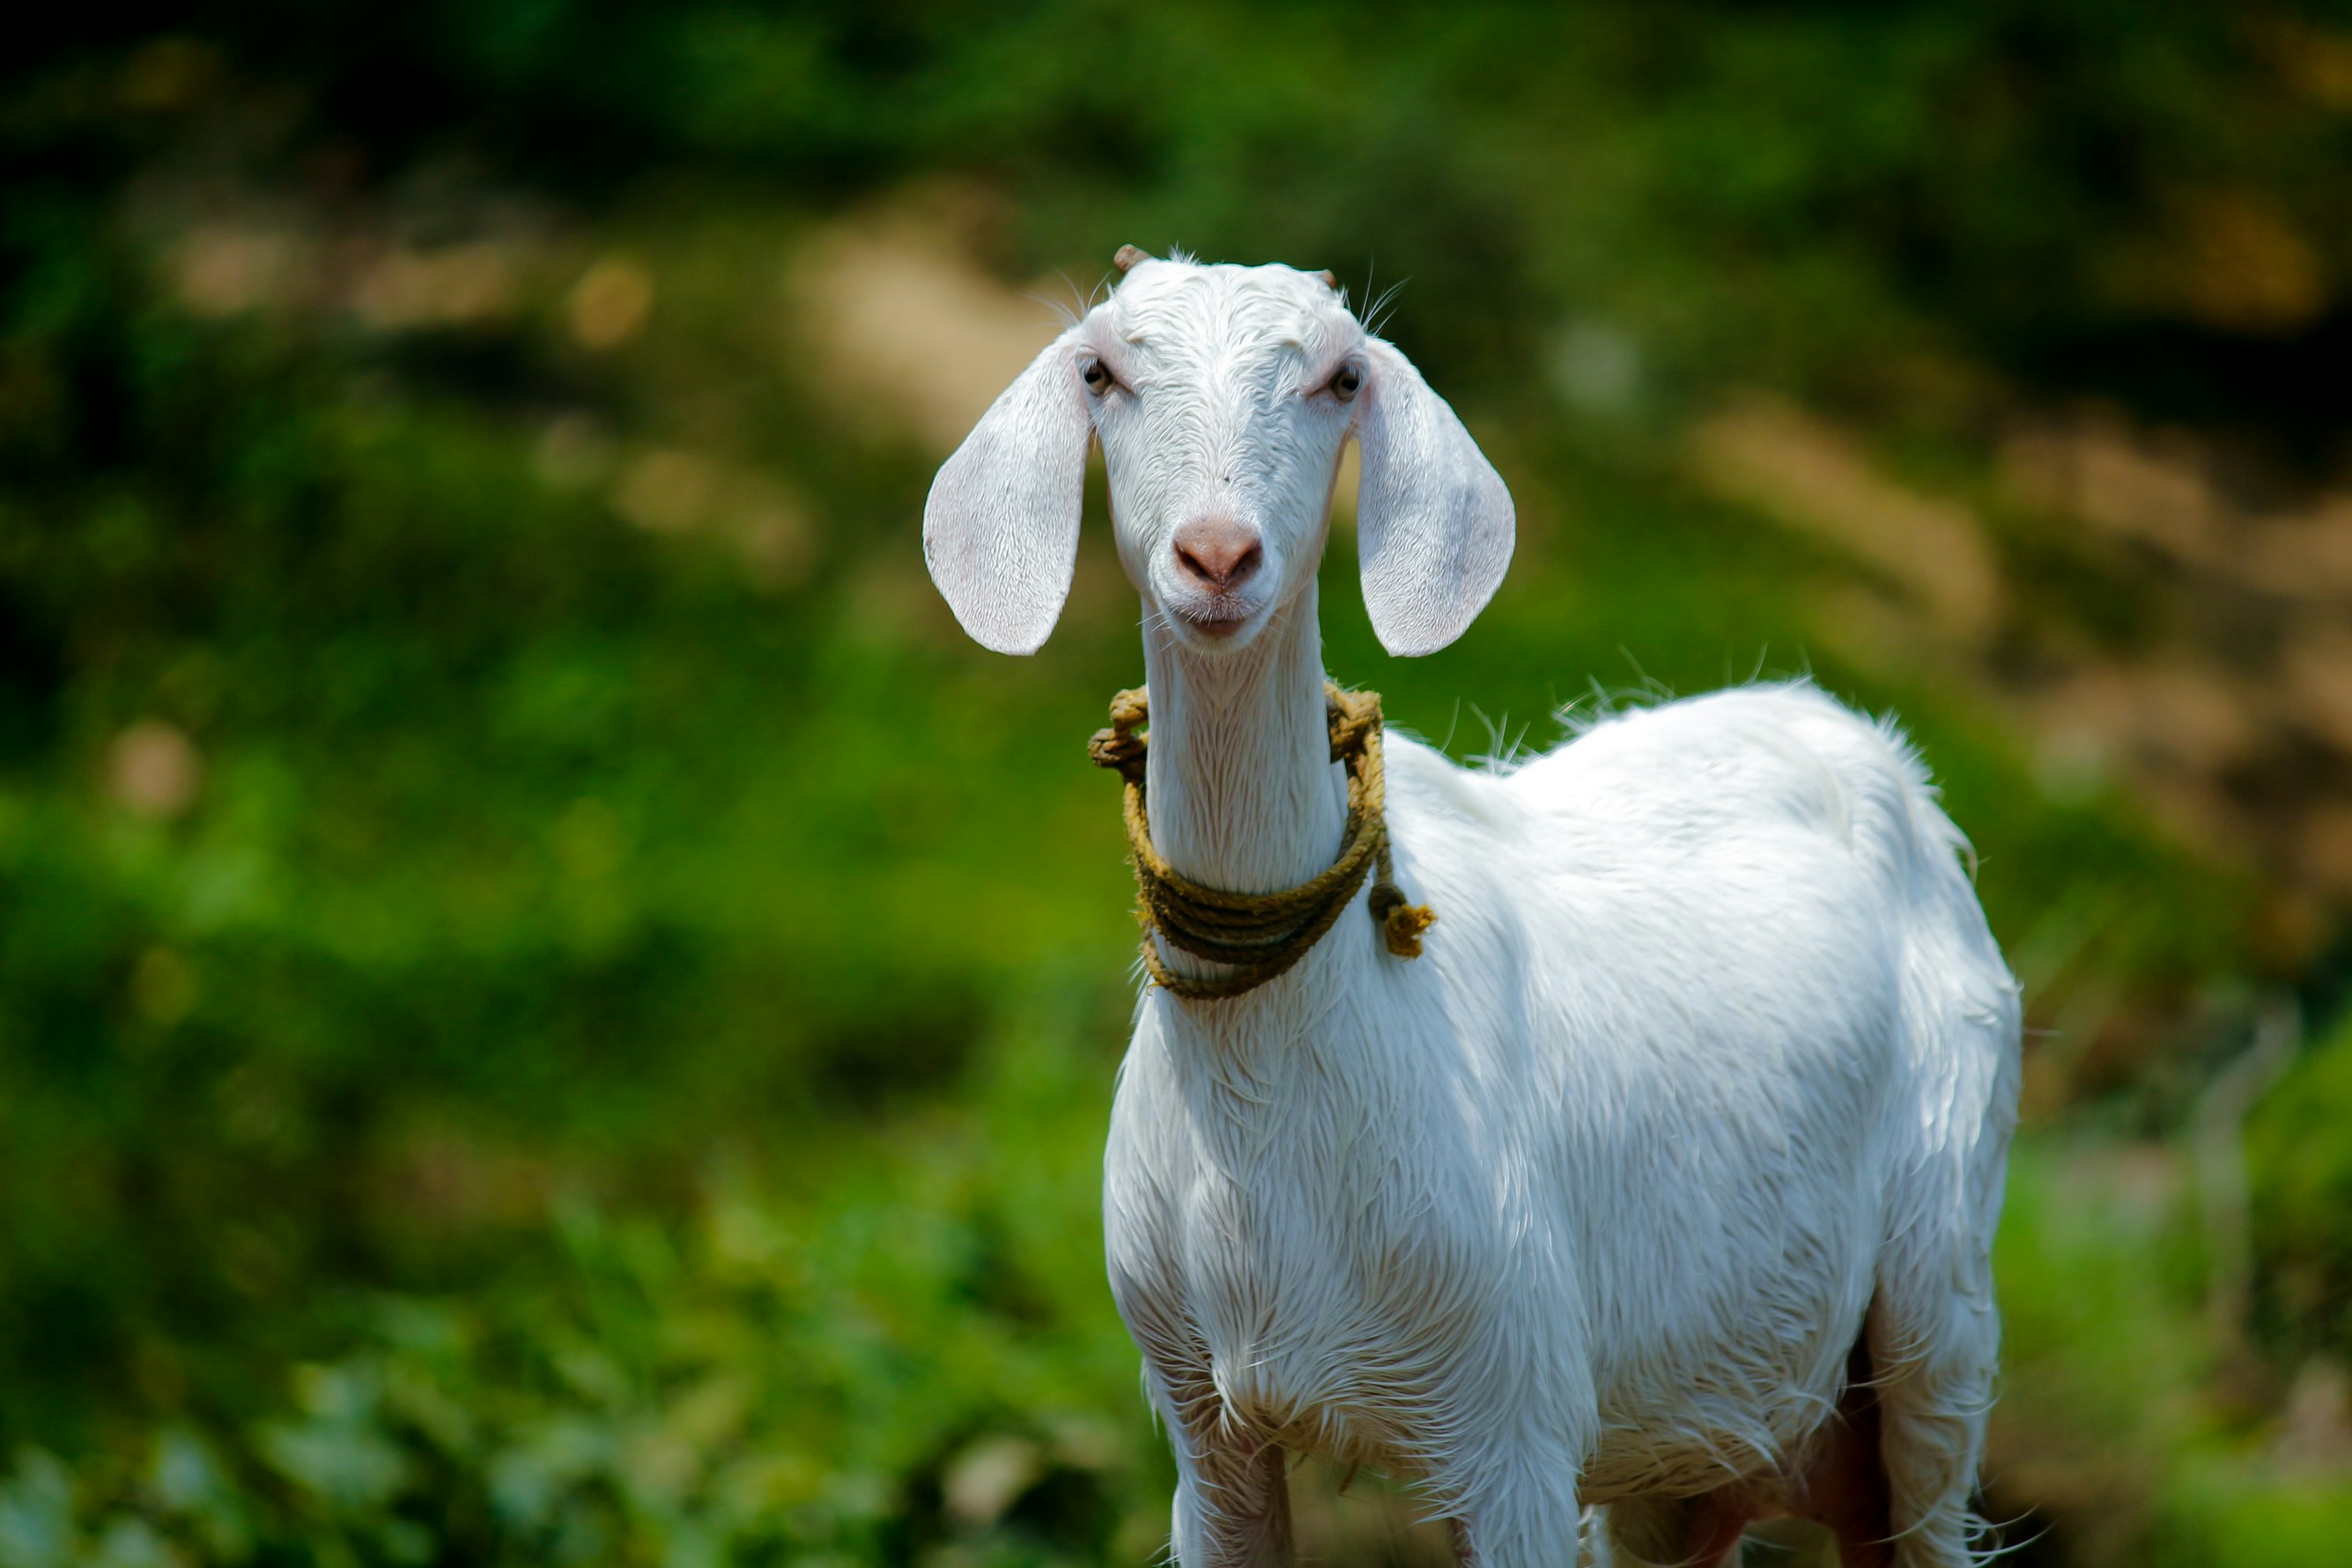 150 Goats to ‘Mow’ 7 Acres of Brackenridge Park